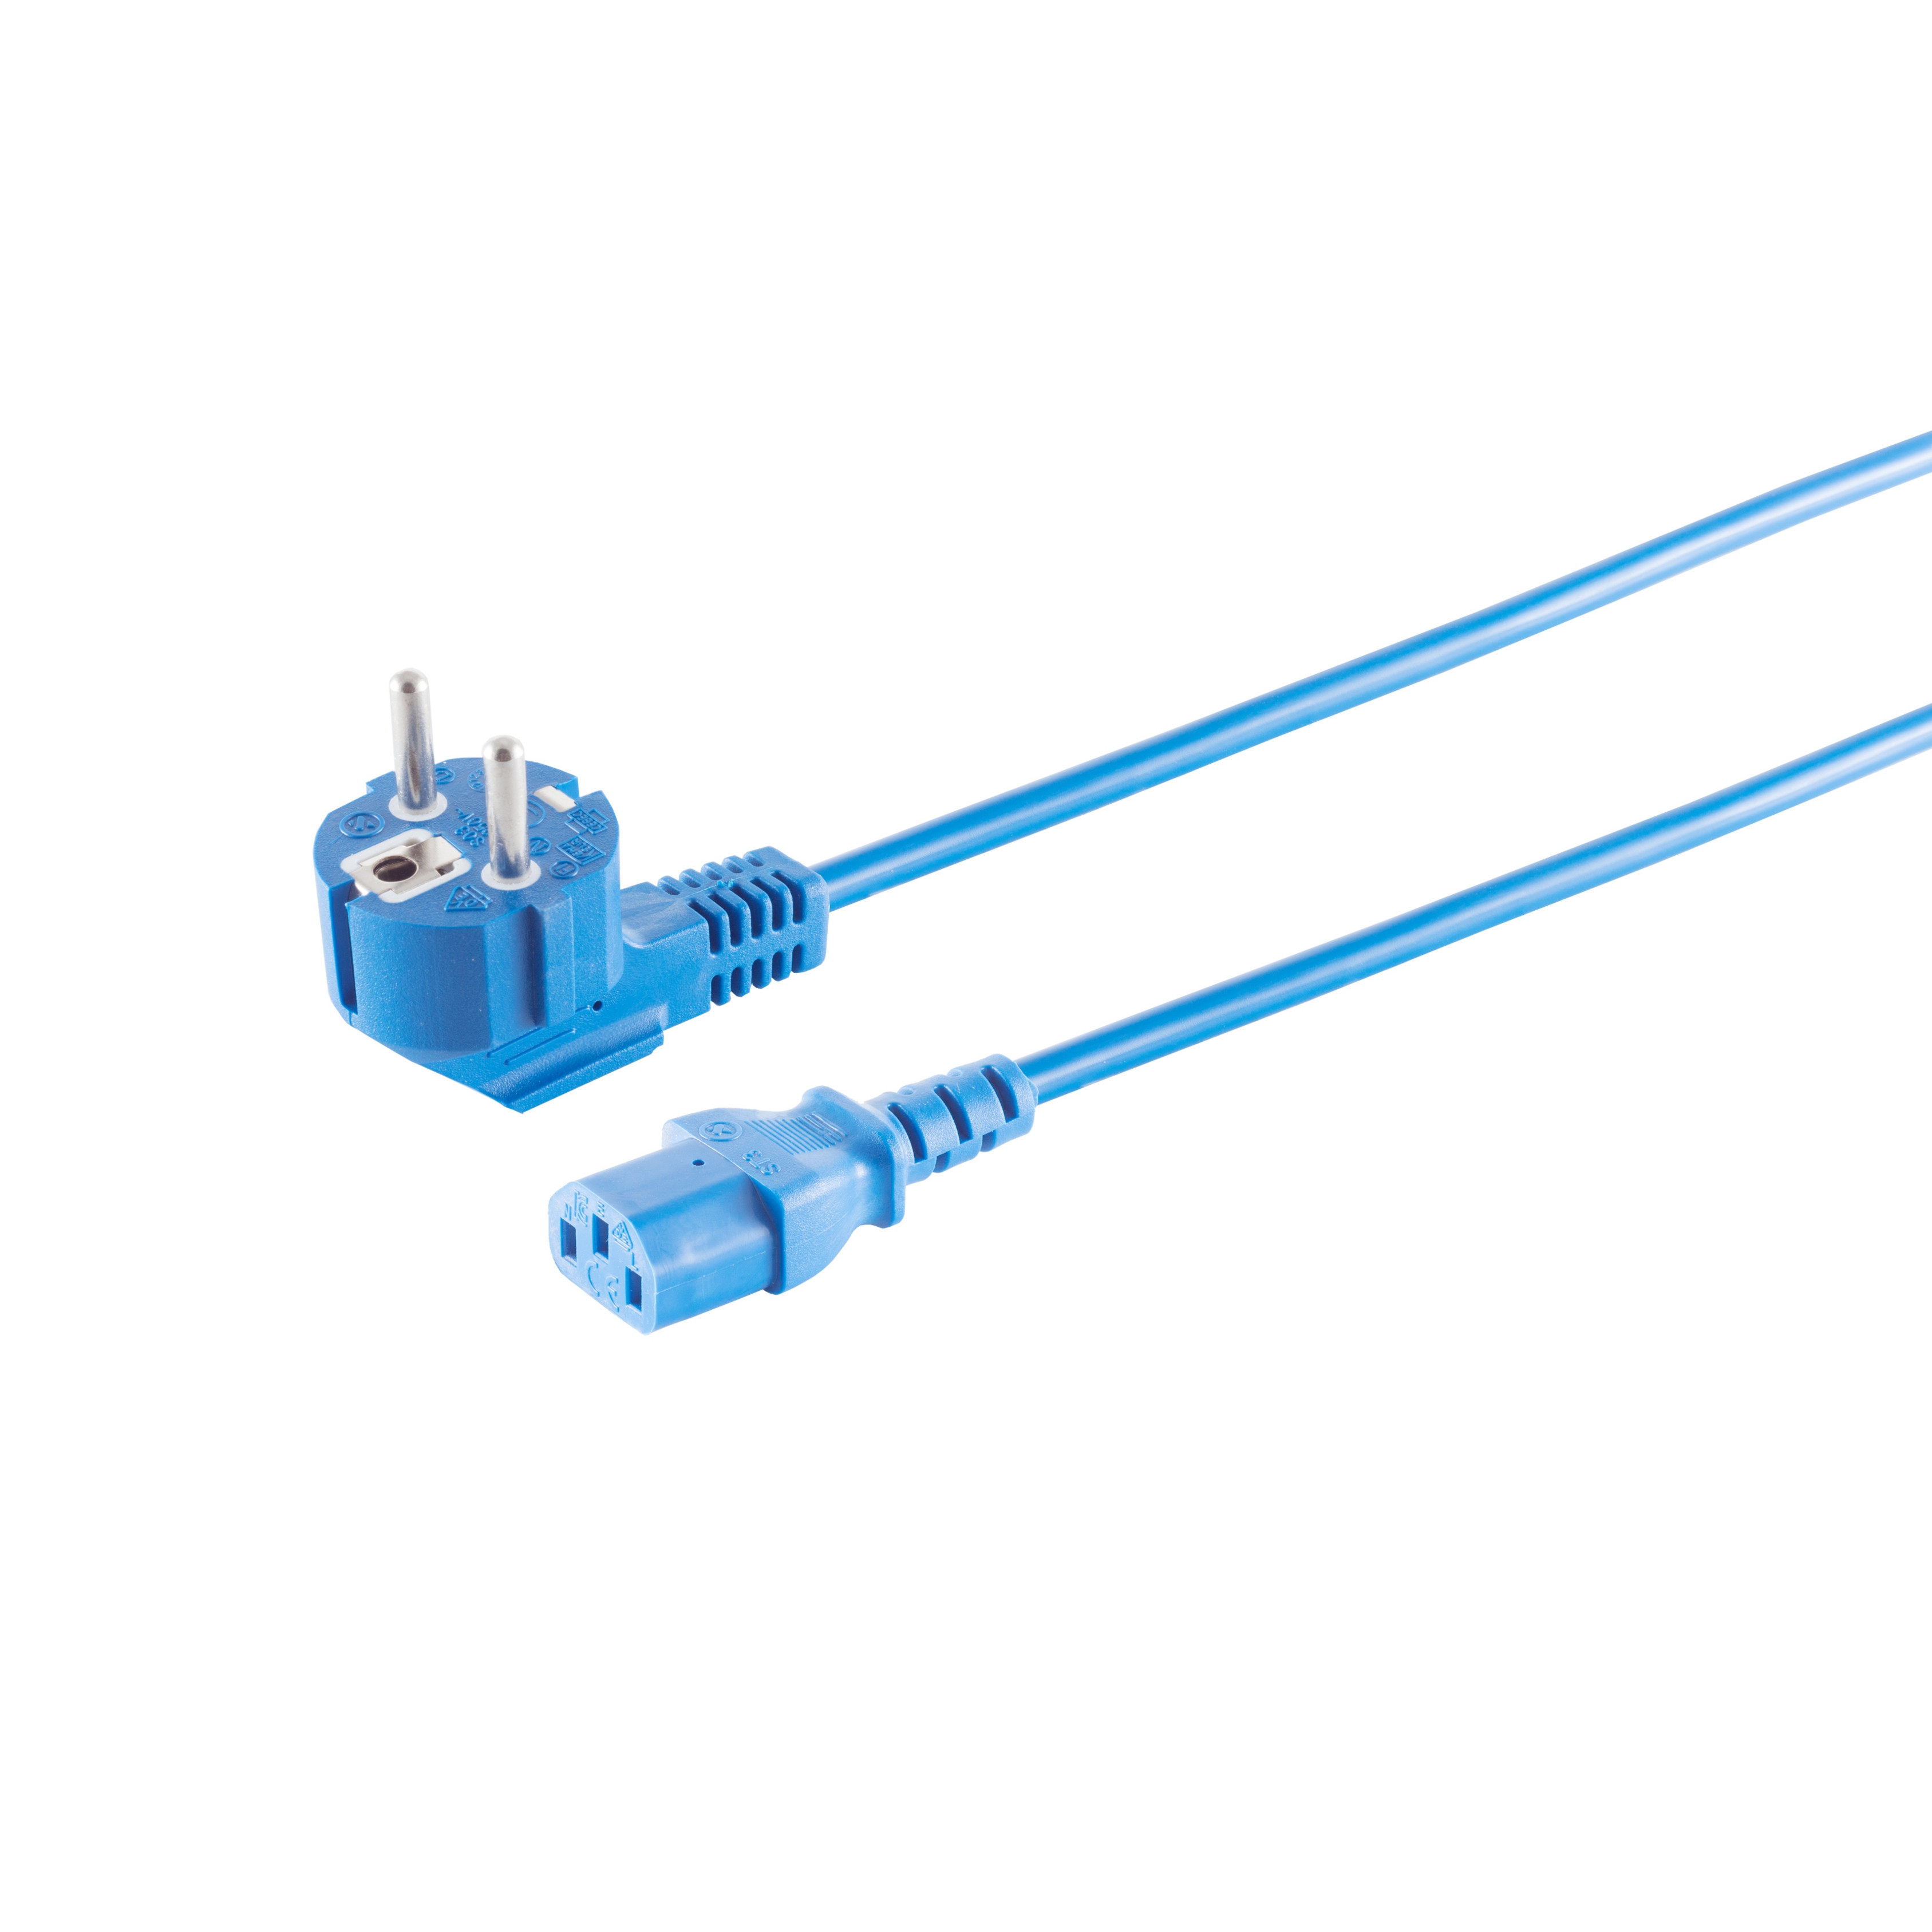 S/CONN MAXIMUM 90°/Kaltgerätebuchse blau CONNECTIVITY 3m Schutzkontakt Netzanschlusskabel